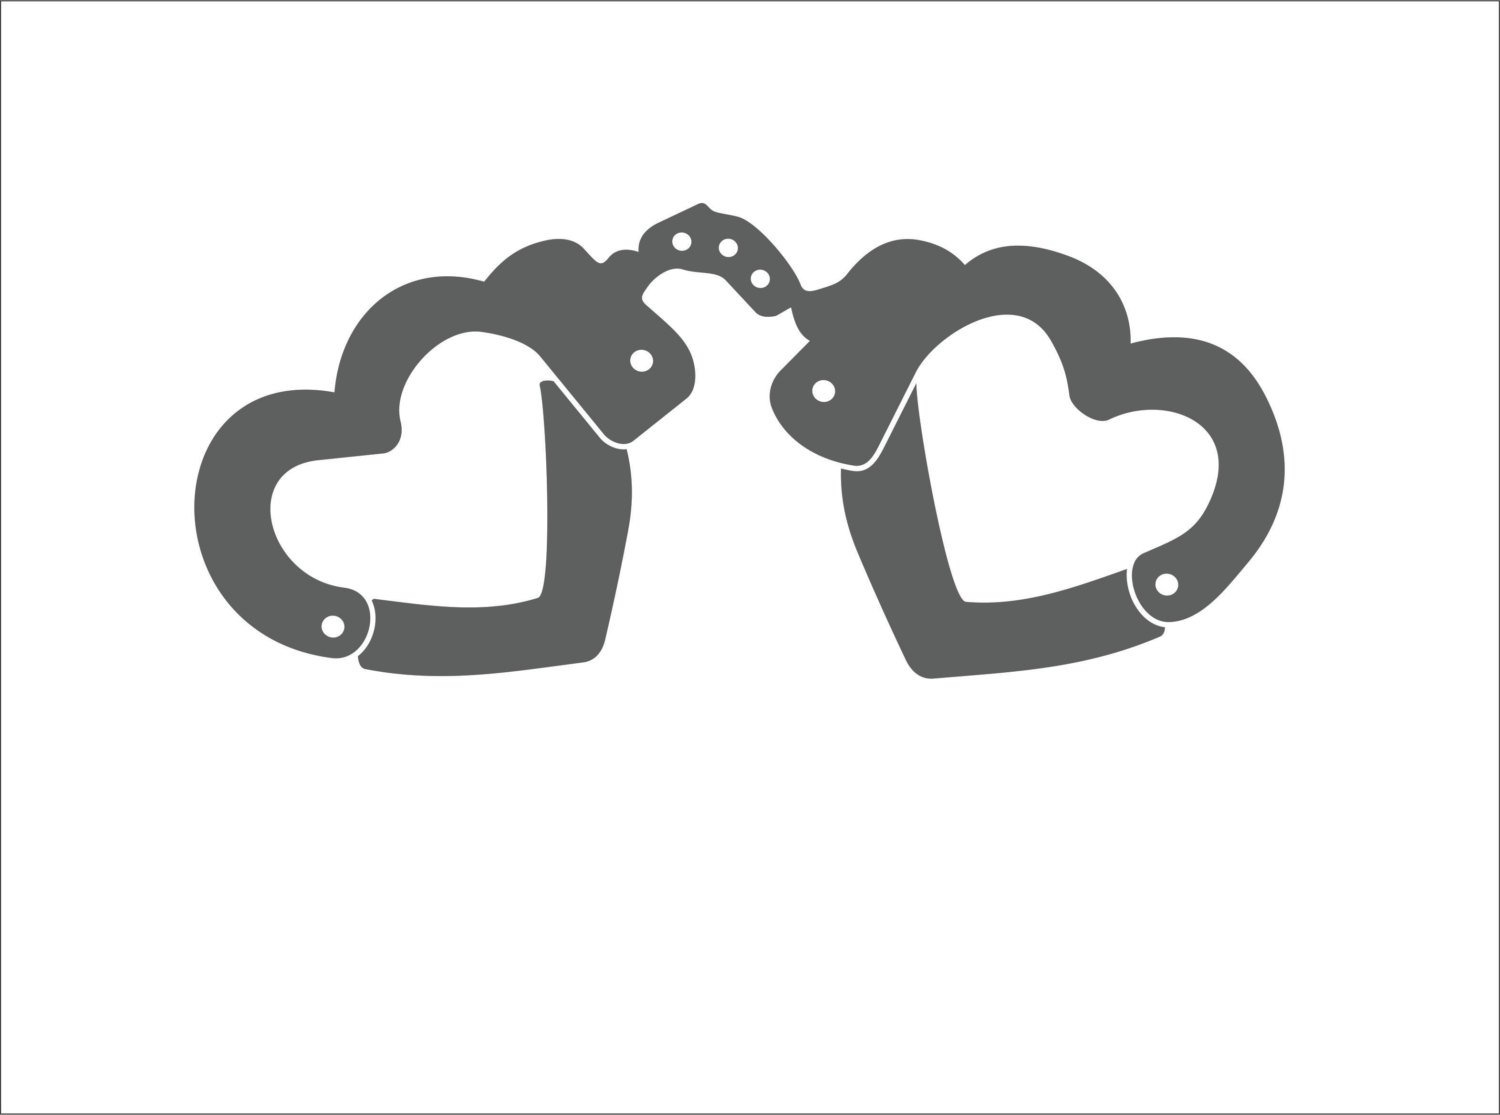 Free cuffs cliparts download. Handcuffs clipart heart